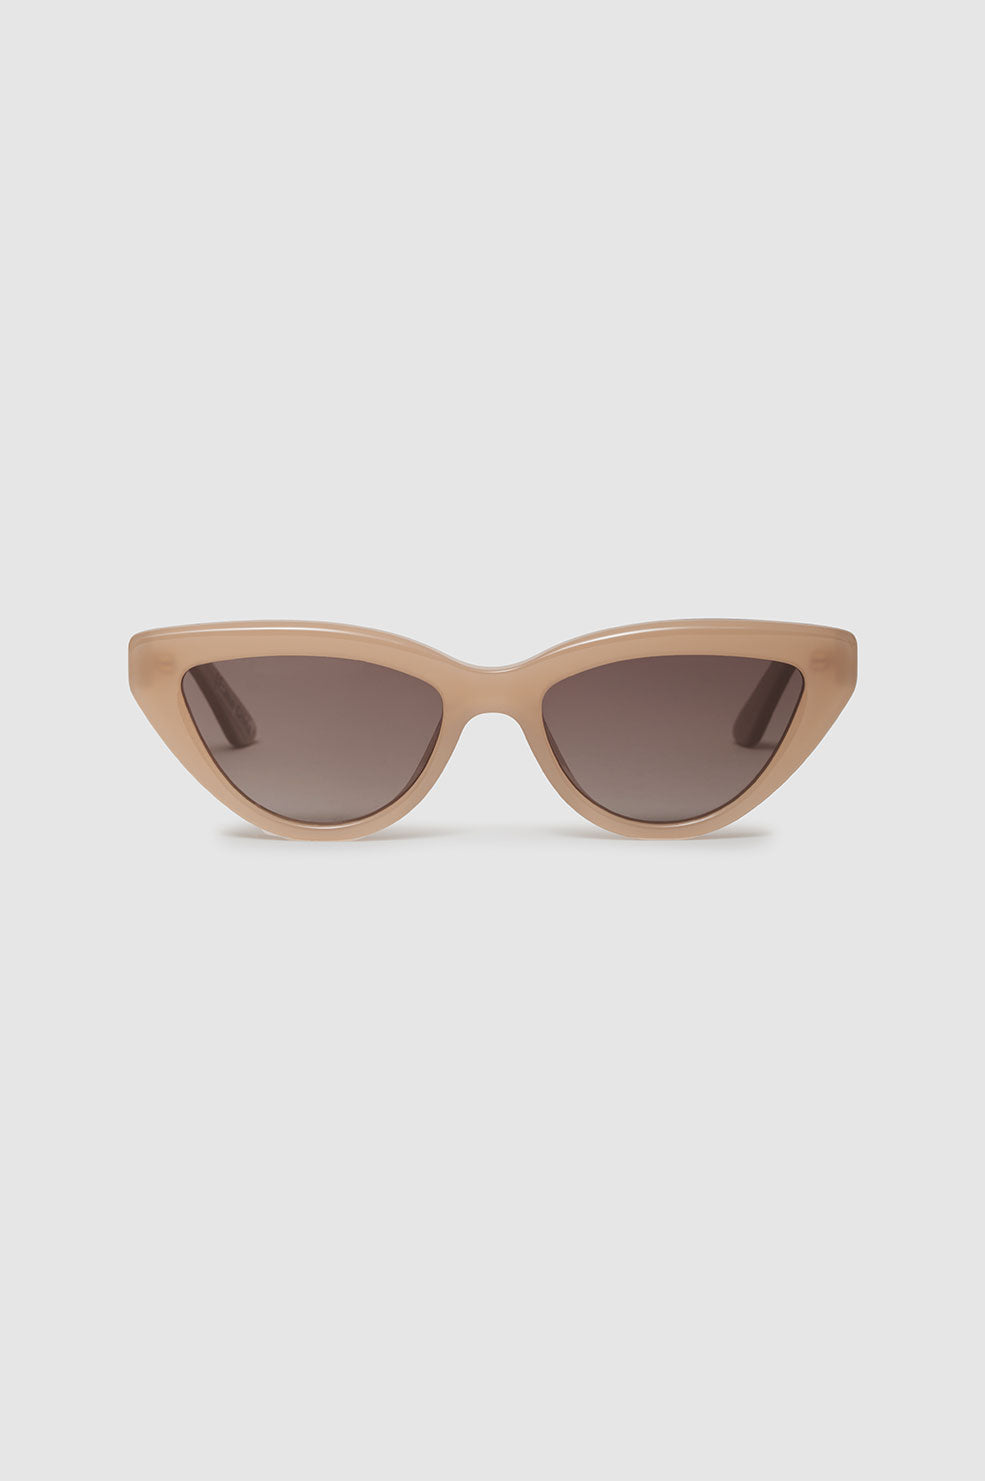 ANINE BING Sedona Sunglasses - Beige - Front View